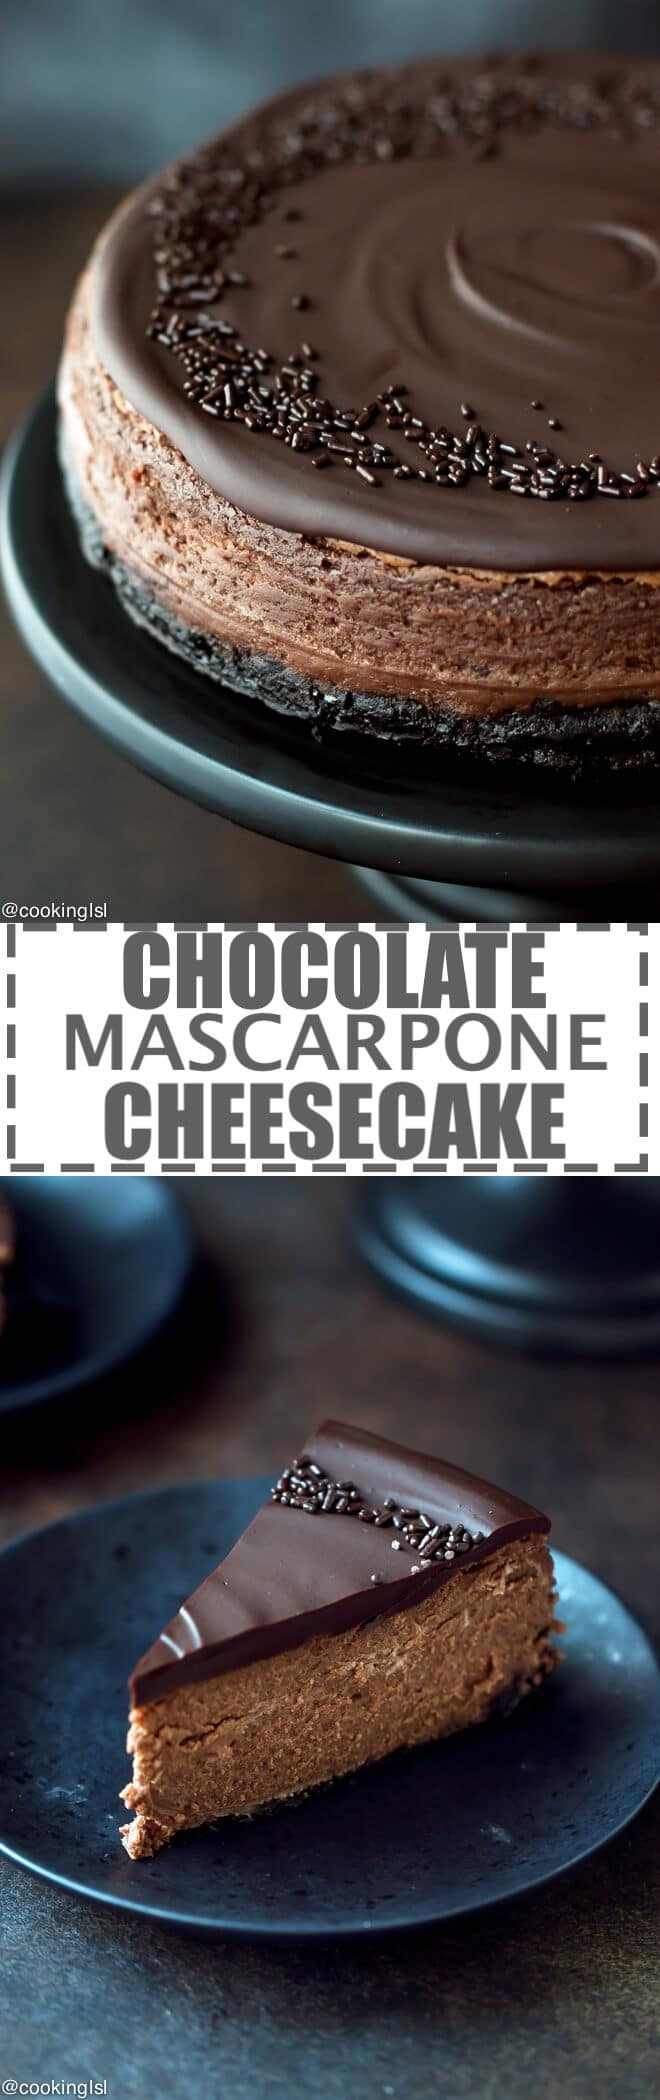 Mascarpone Cheese Cake Recipes
 Chocolate Mascarpone Cheesecake Recipe Cooking LSL